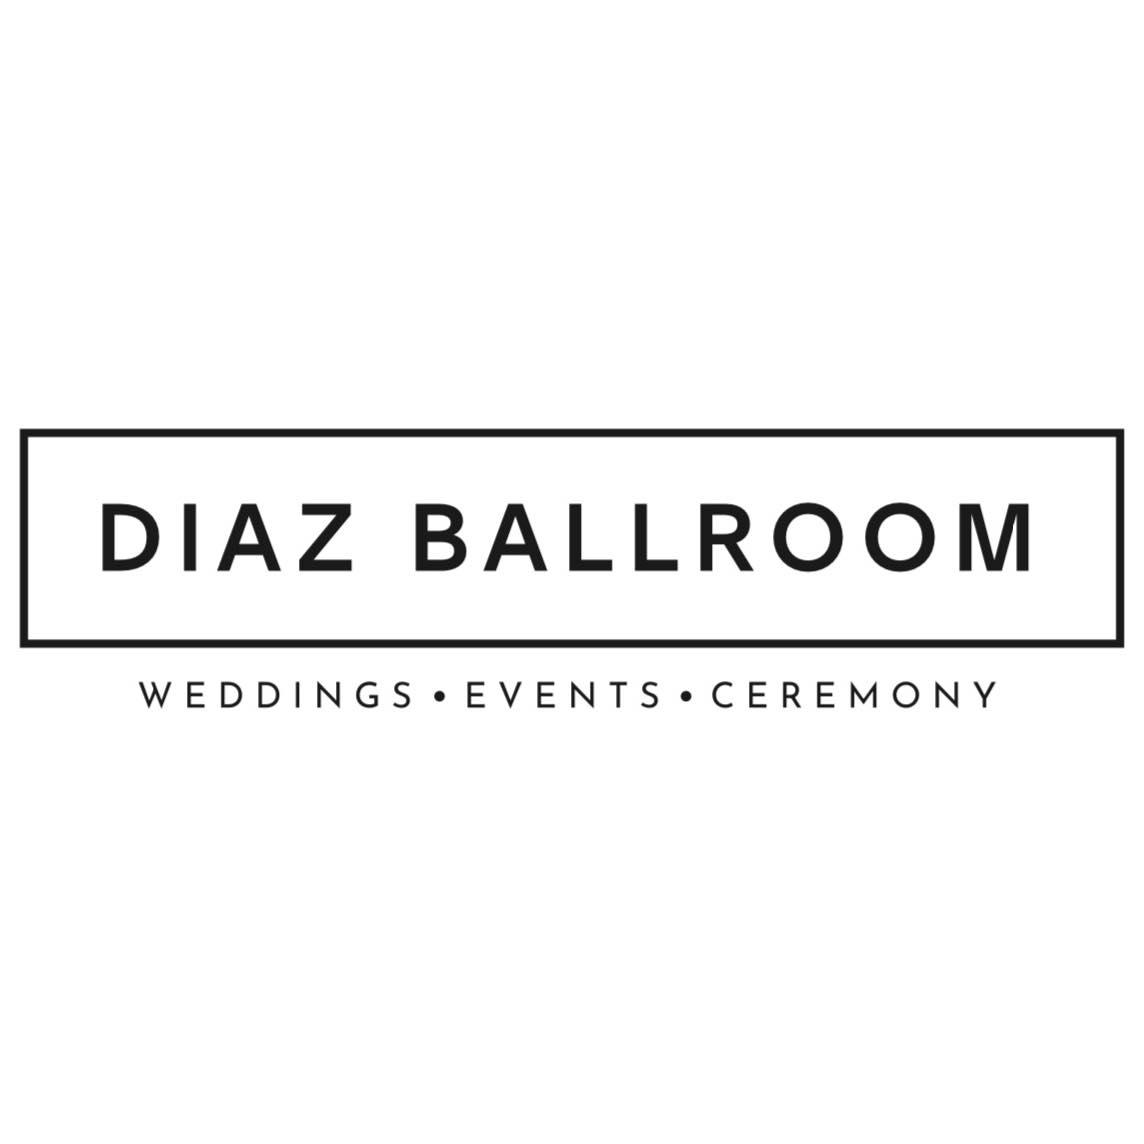 Diaz Ballroom